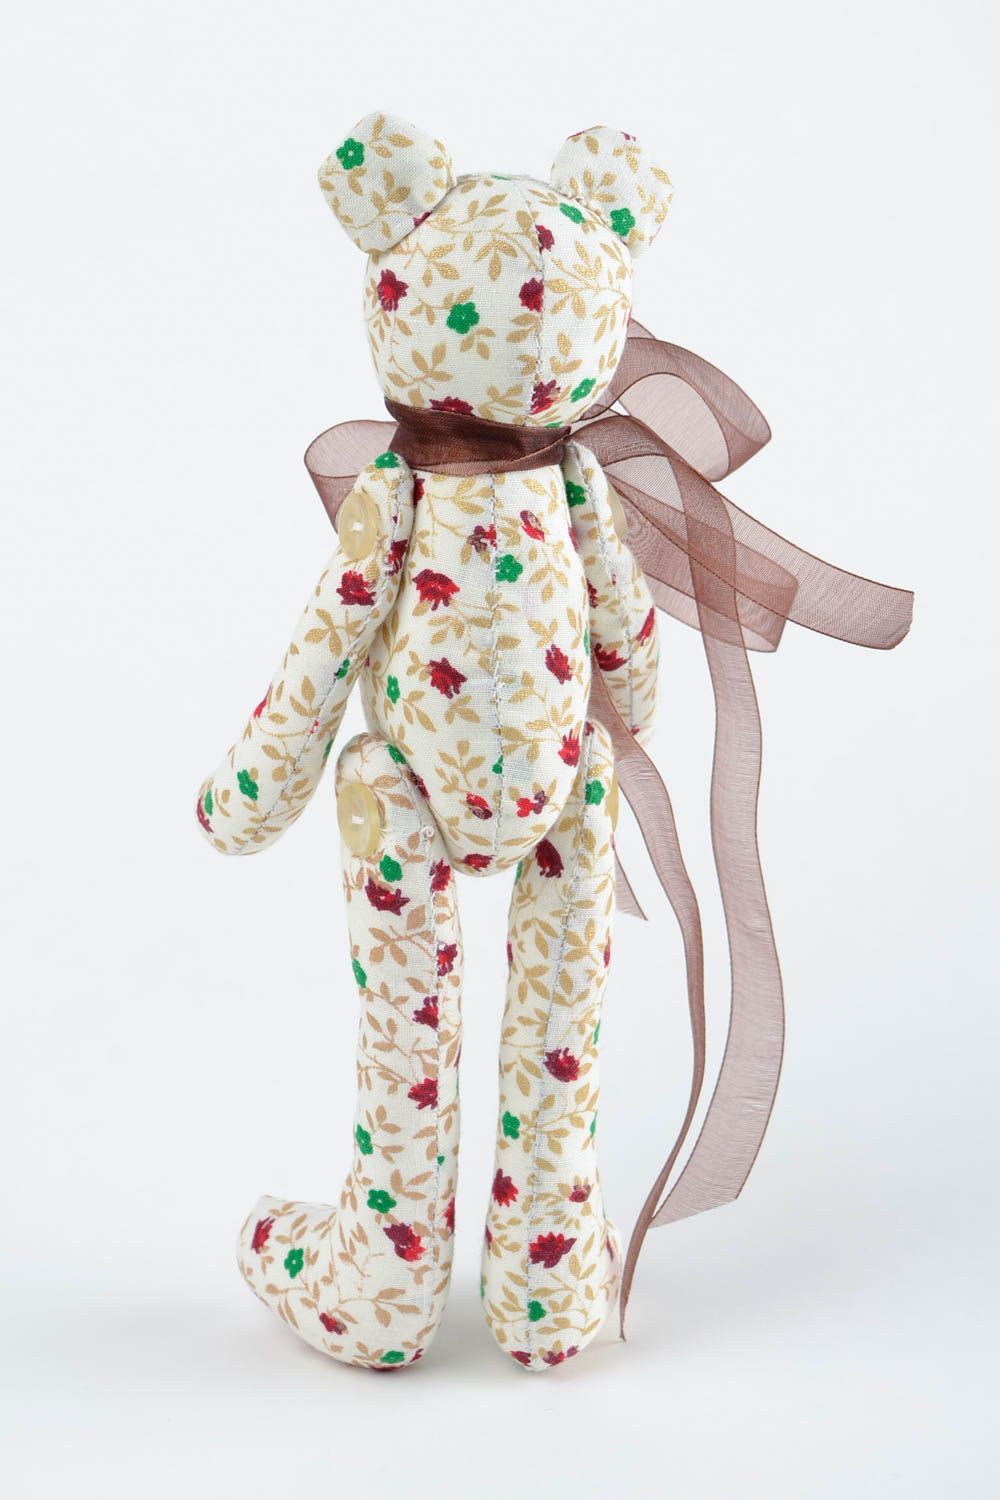 Bear toy soft toy handmade toy gifts for children nursery decor designer toys photo 5